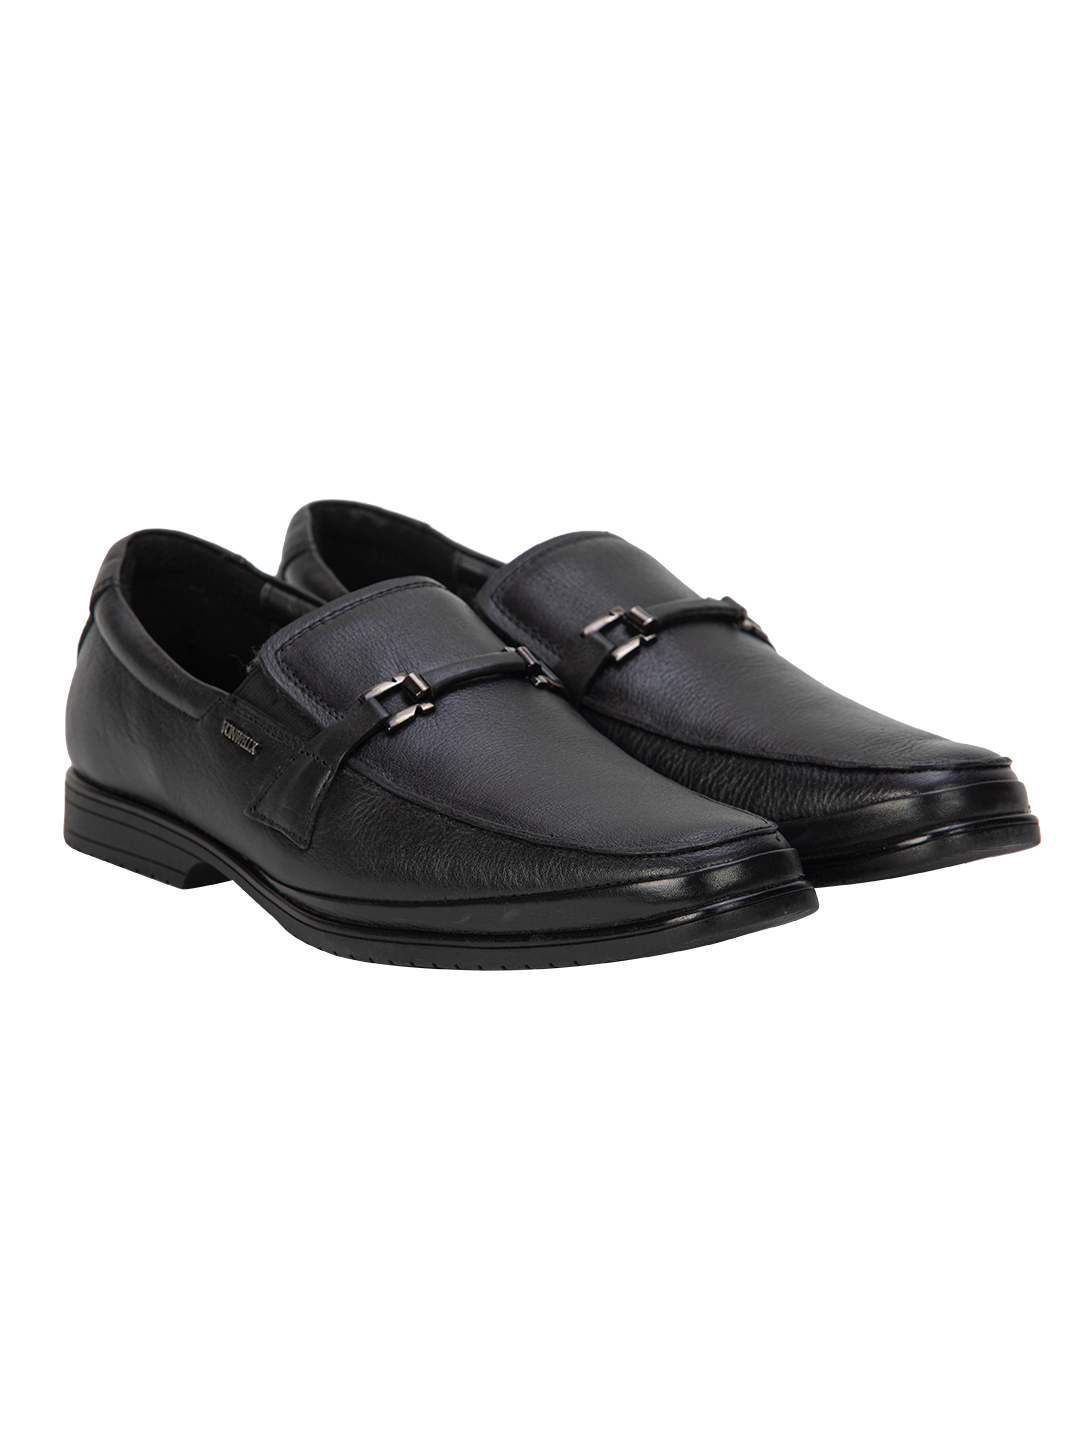 Buy Von Wellx Germany Comfort Black Jace Shoes Online in Kuwait City